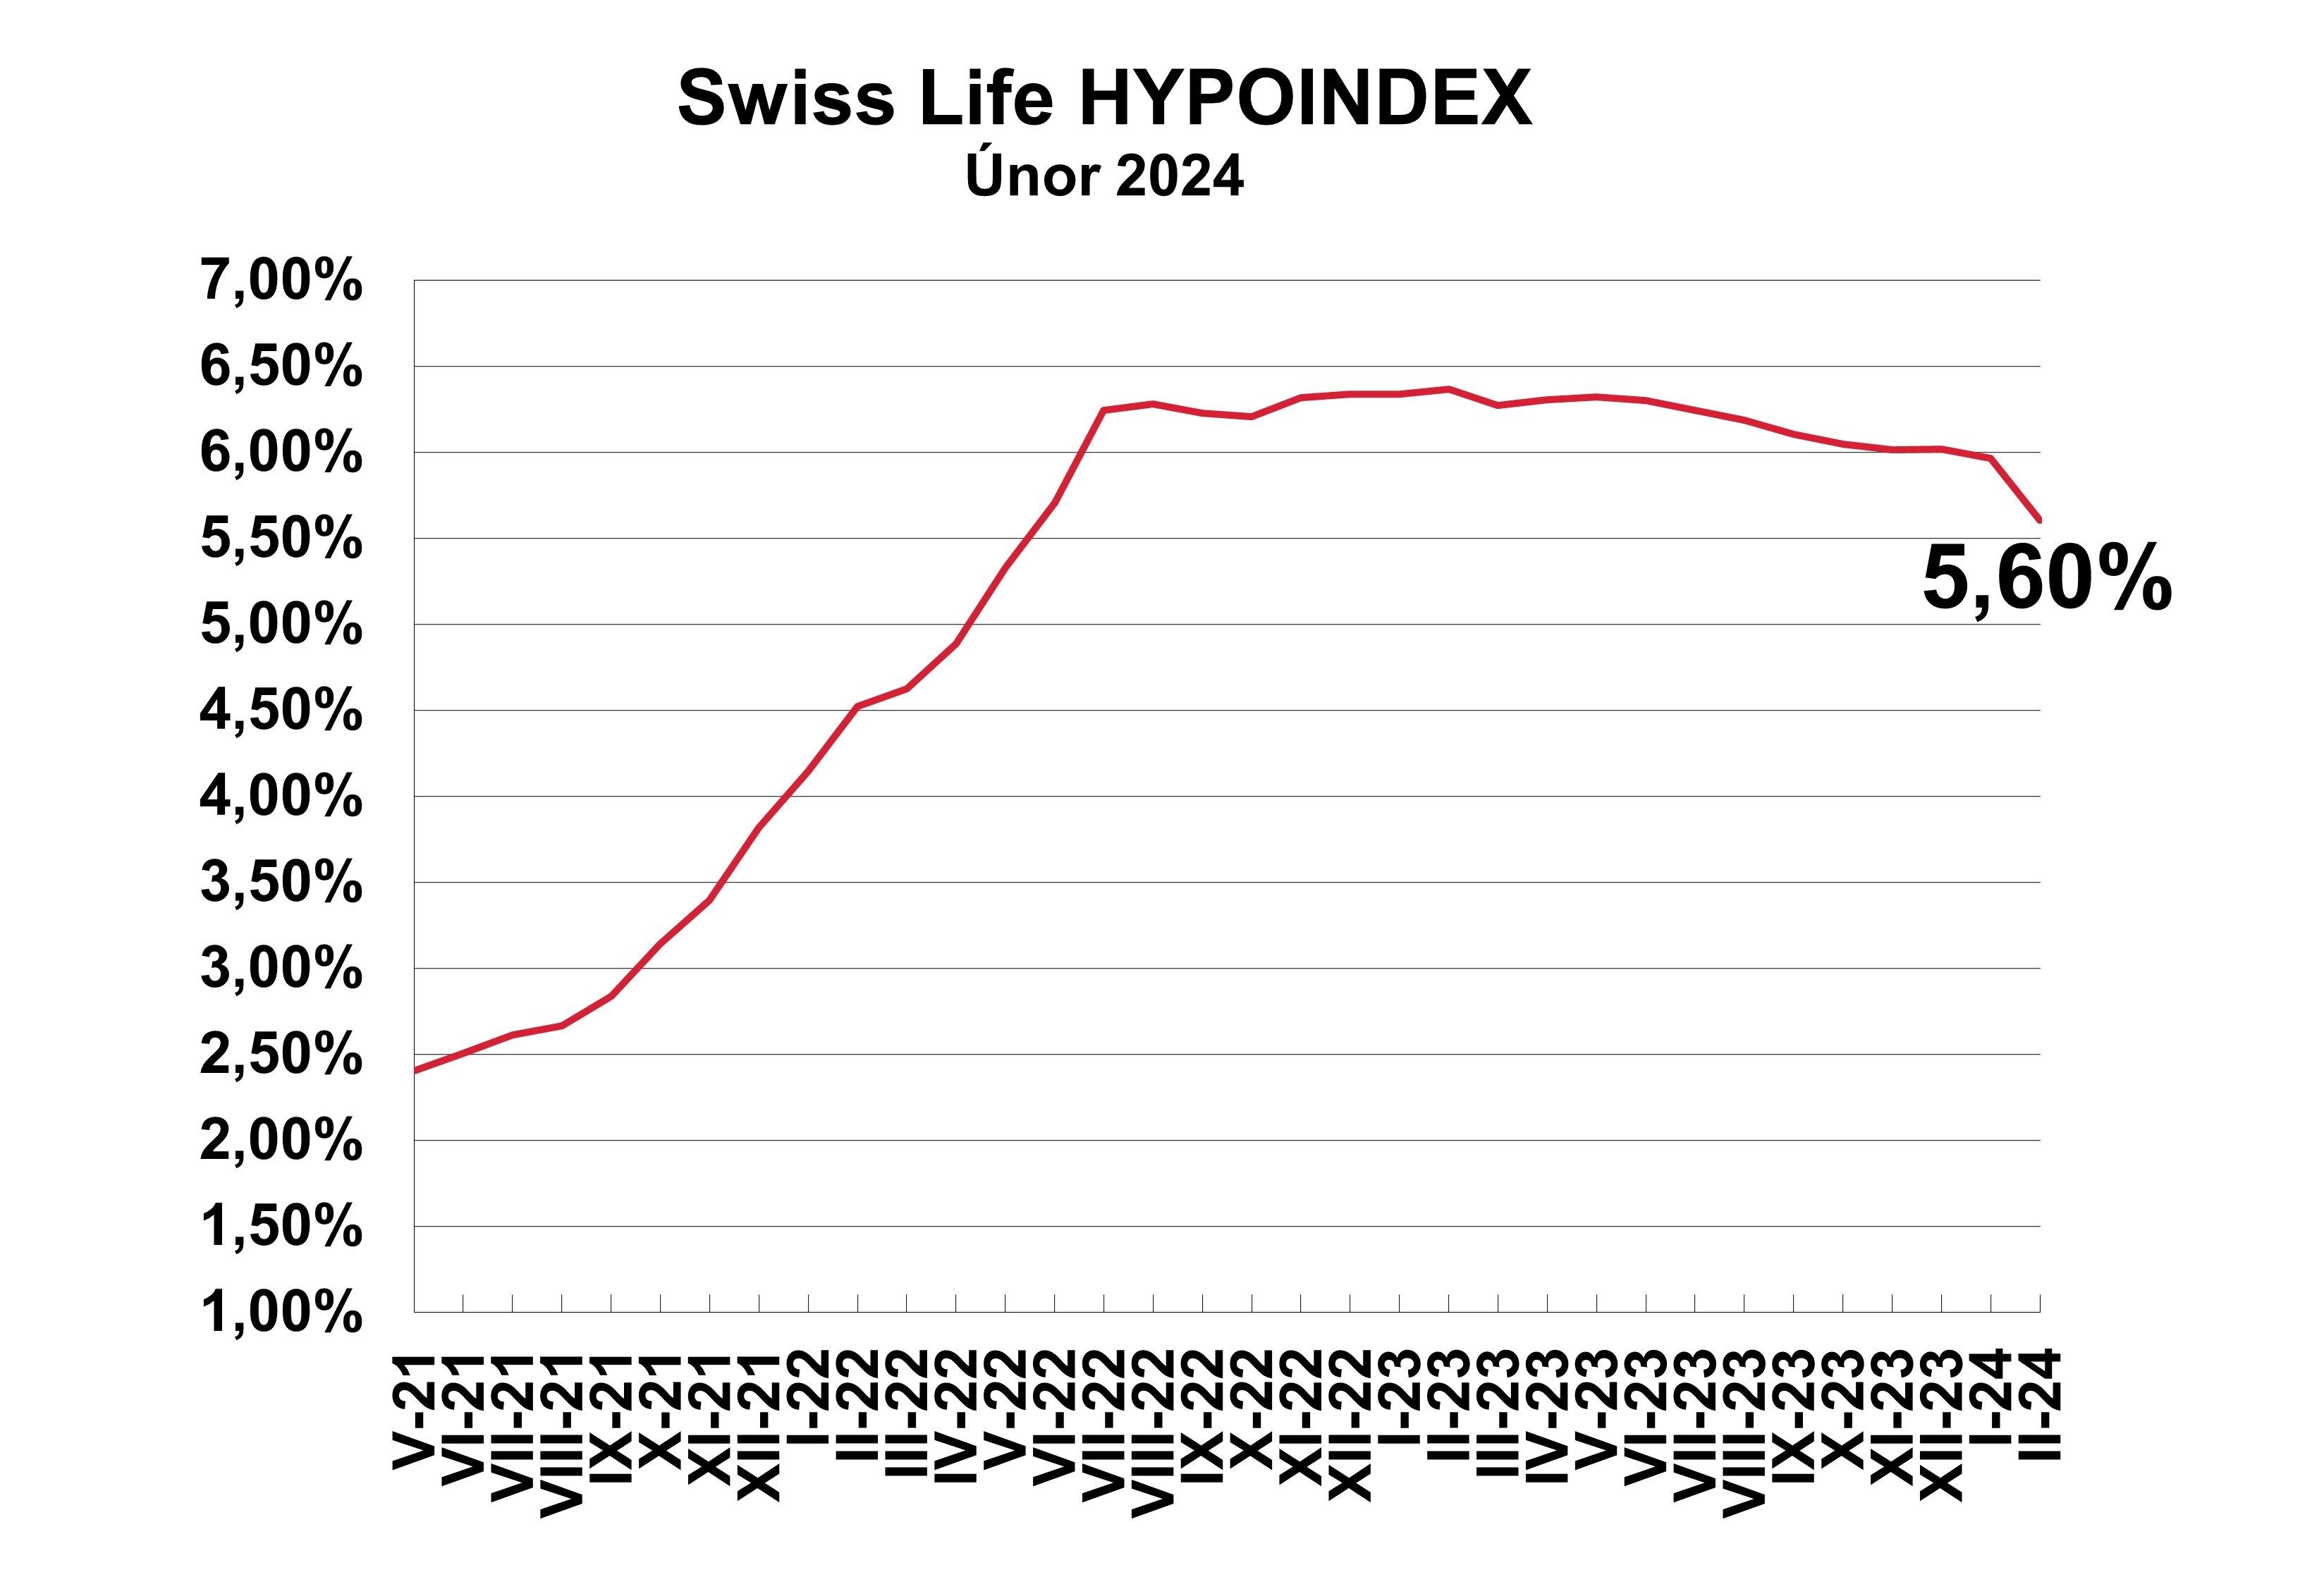 GRAF Swiss Life Hypoindex UNOR 2024